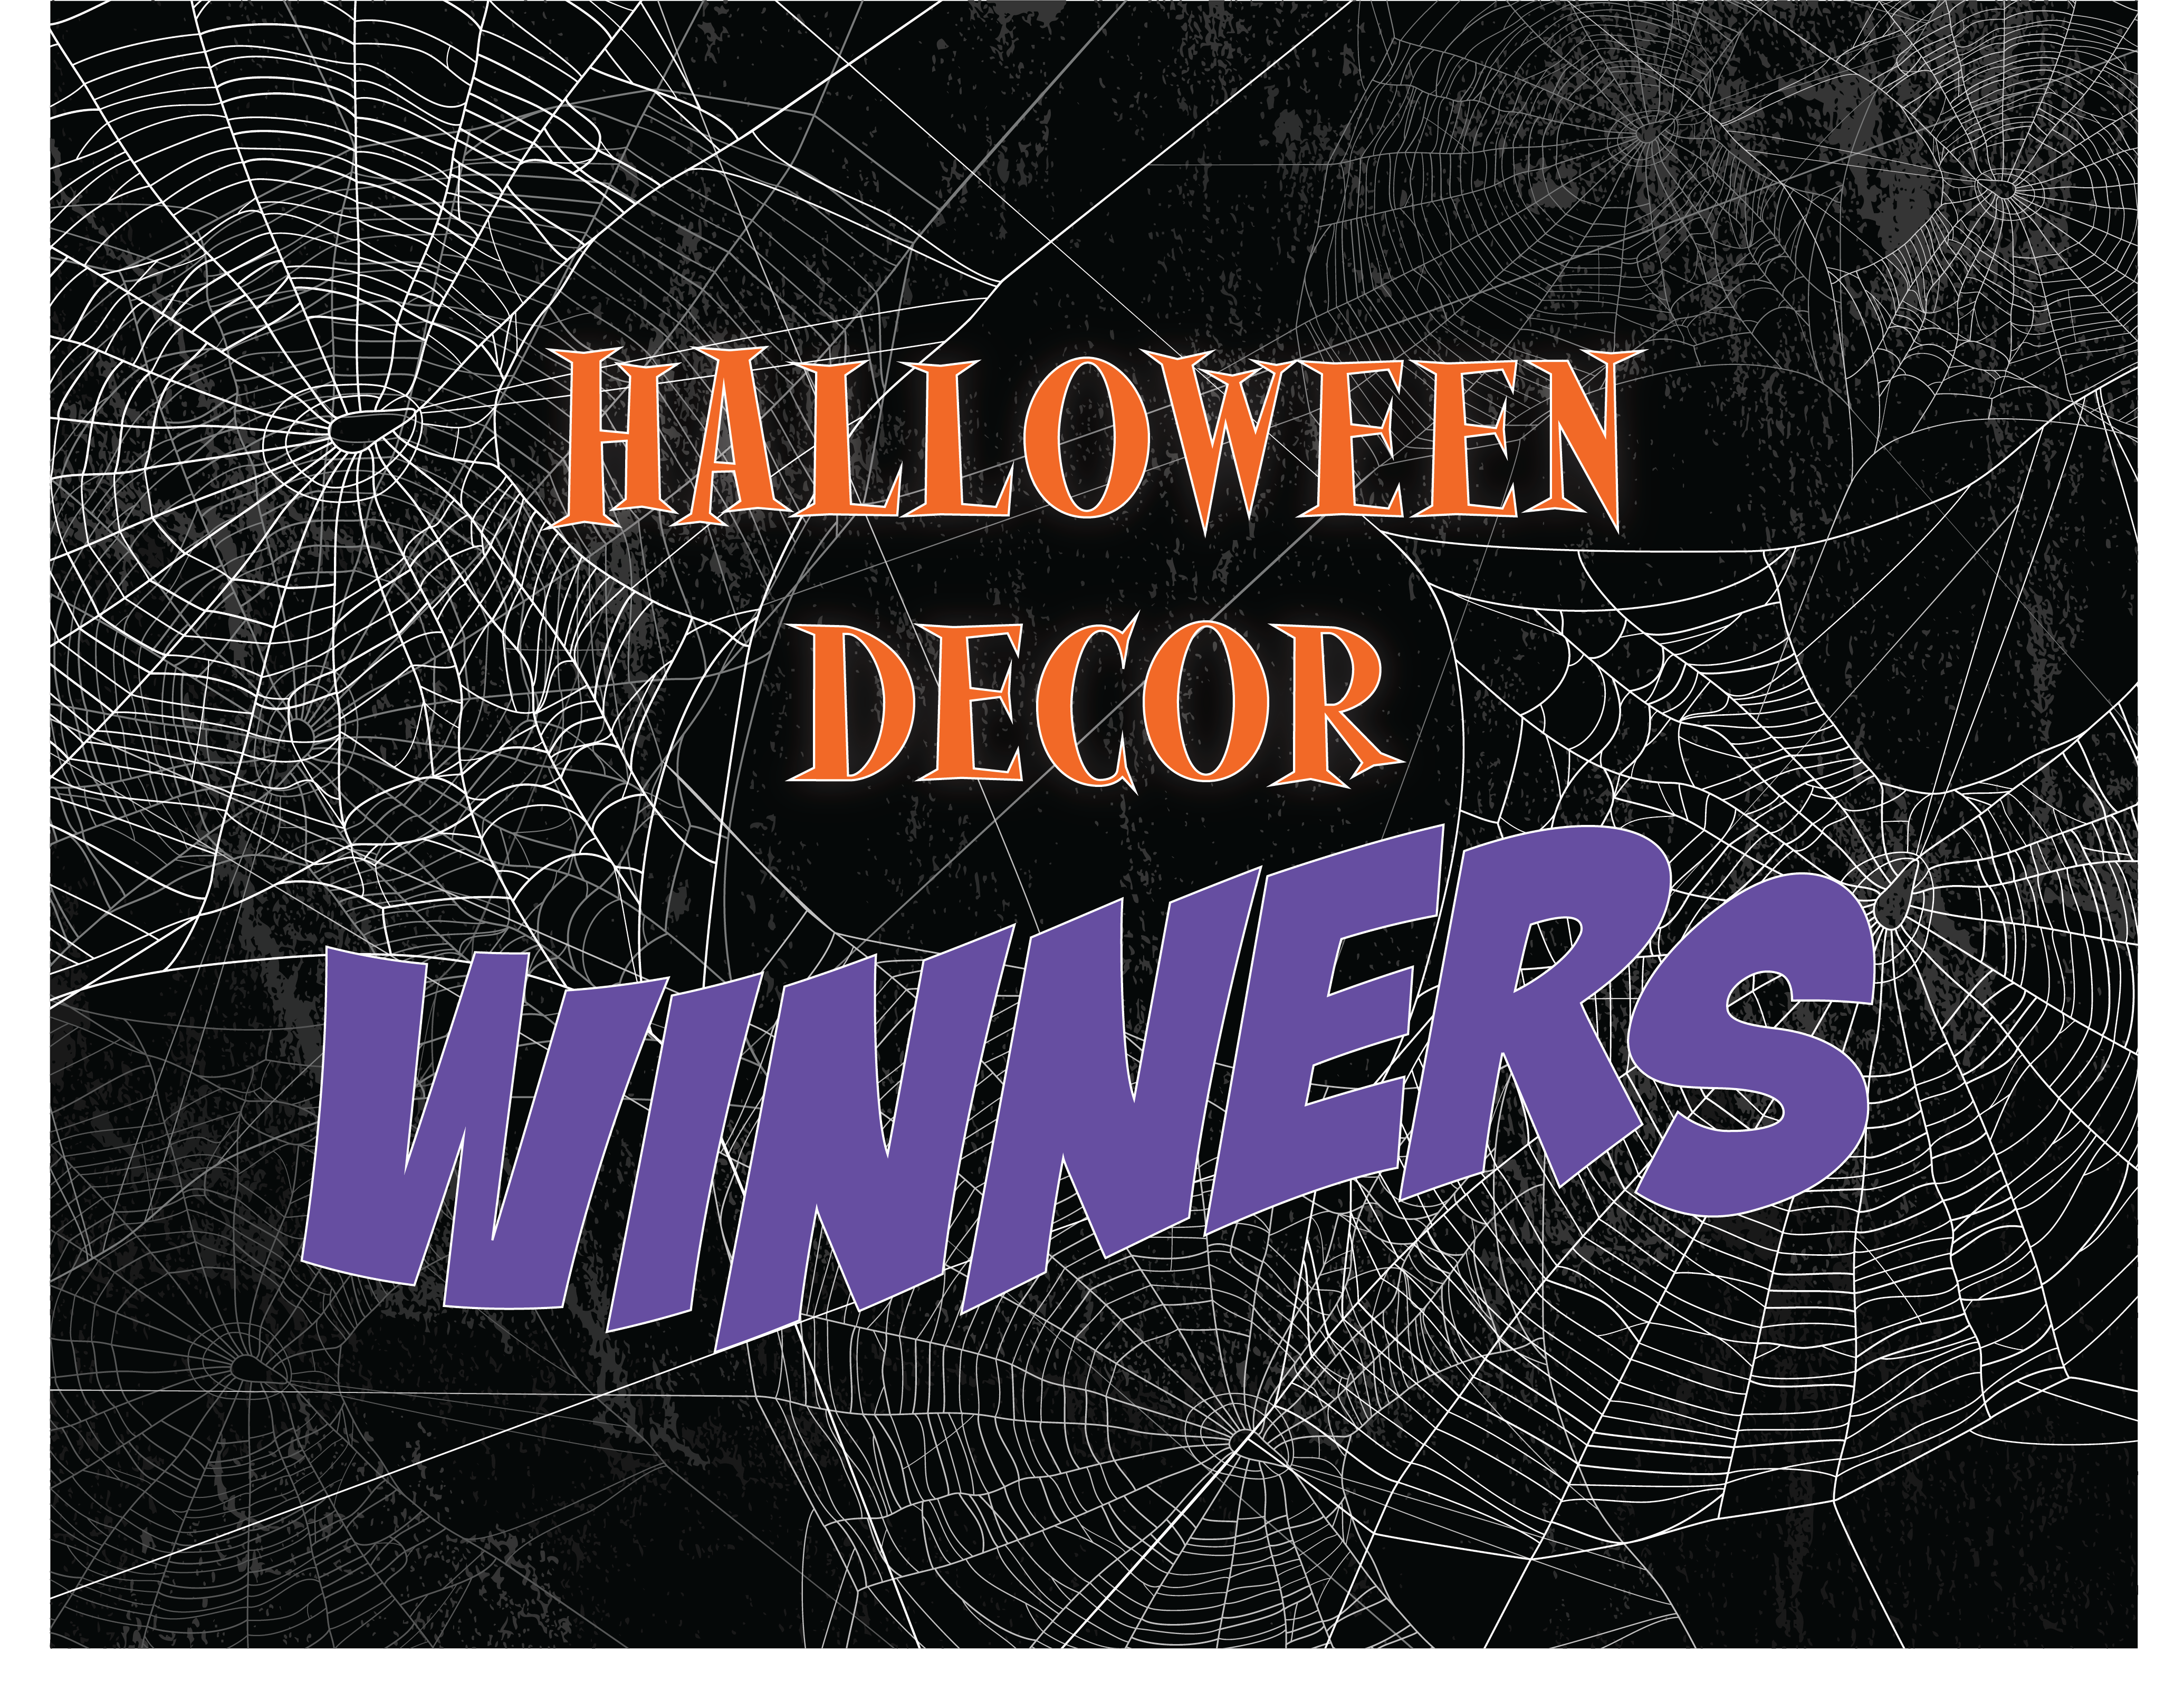 Lakemont Halloween Decor Winners!